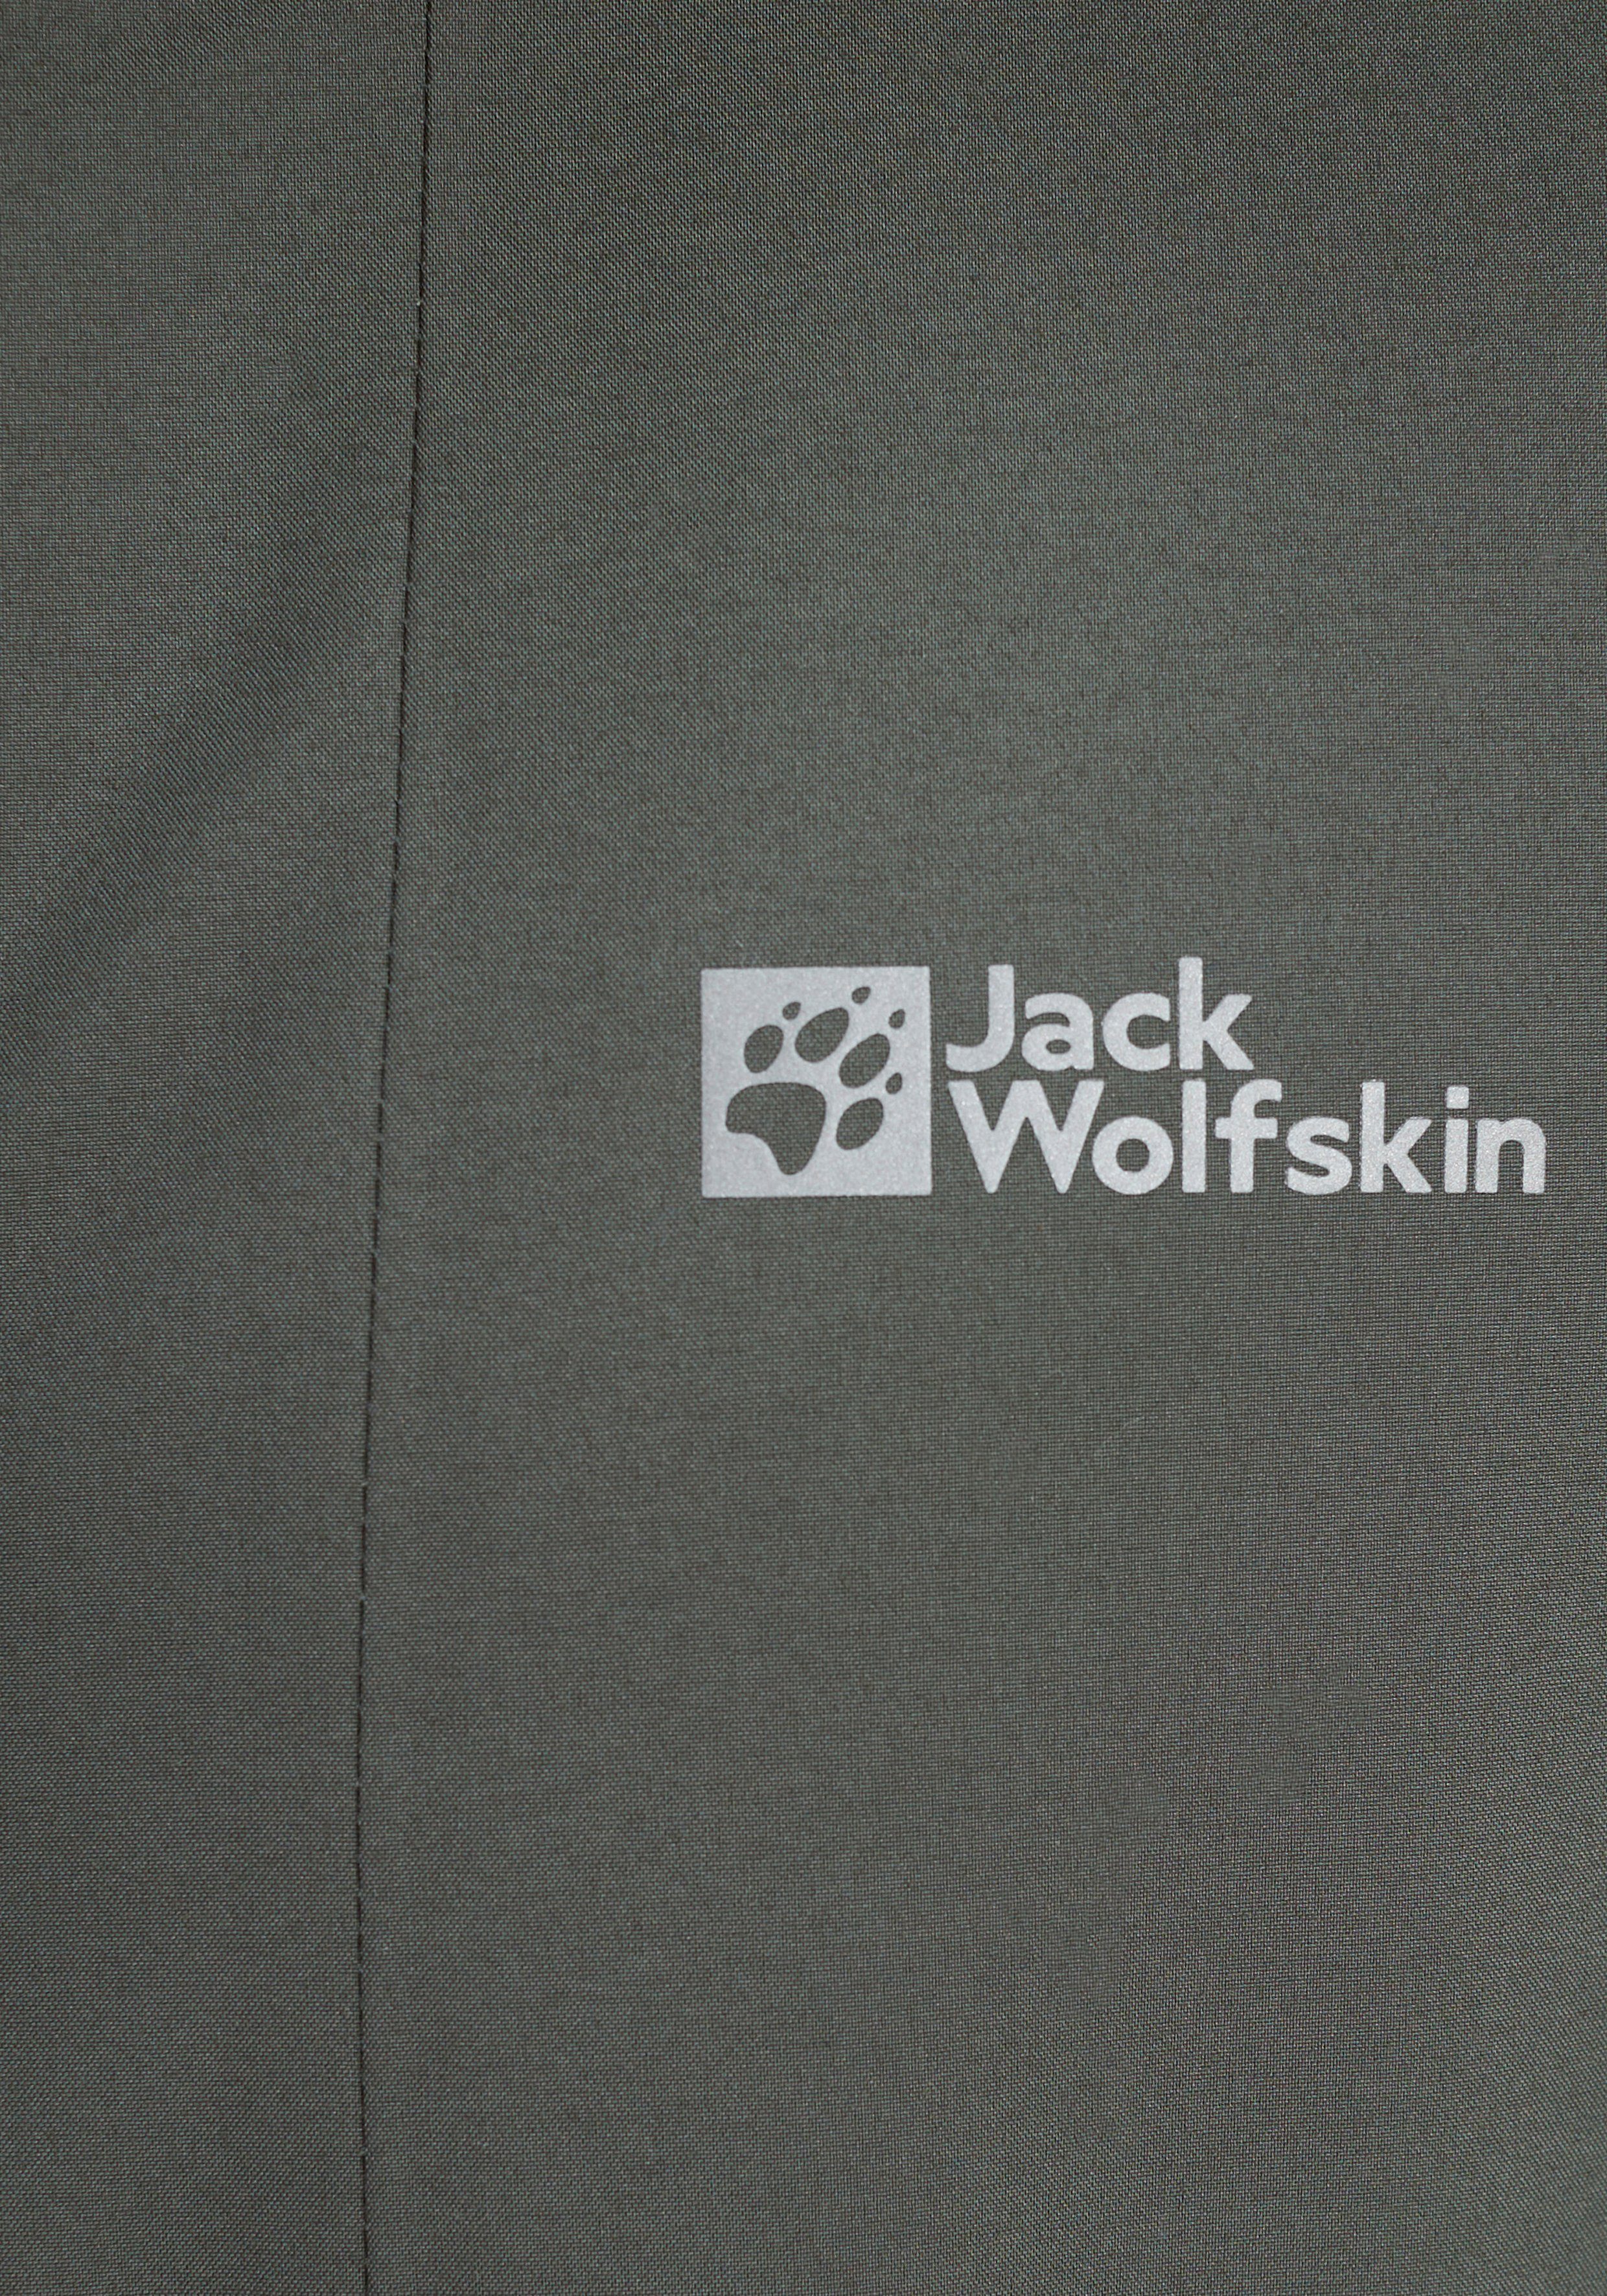 Jack Wolfskin Outdoorjacke COSY BEAR klassischen isolierender K Kinderparka langer, Design im slate green JACKET